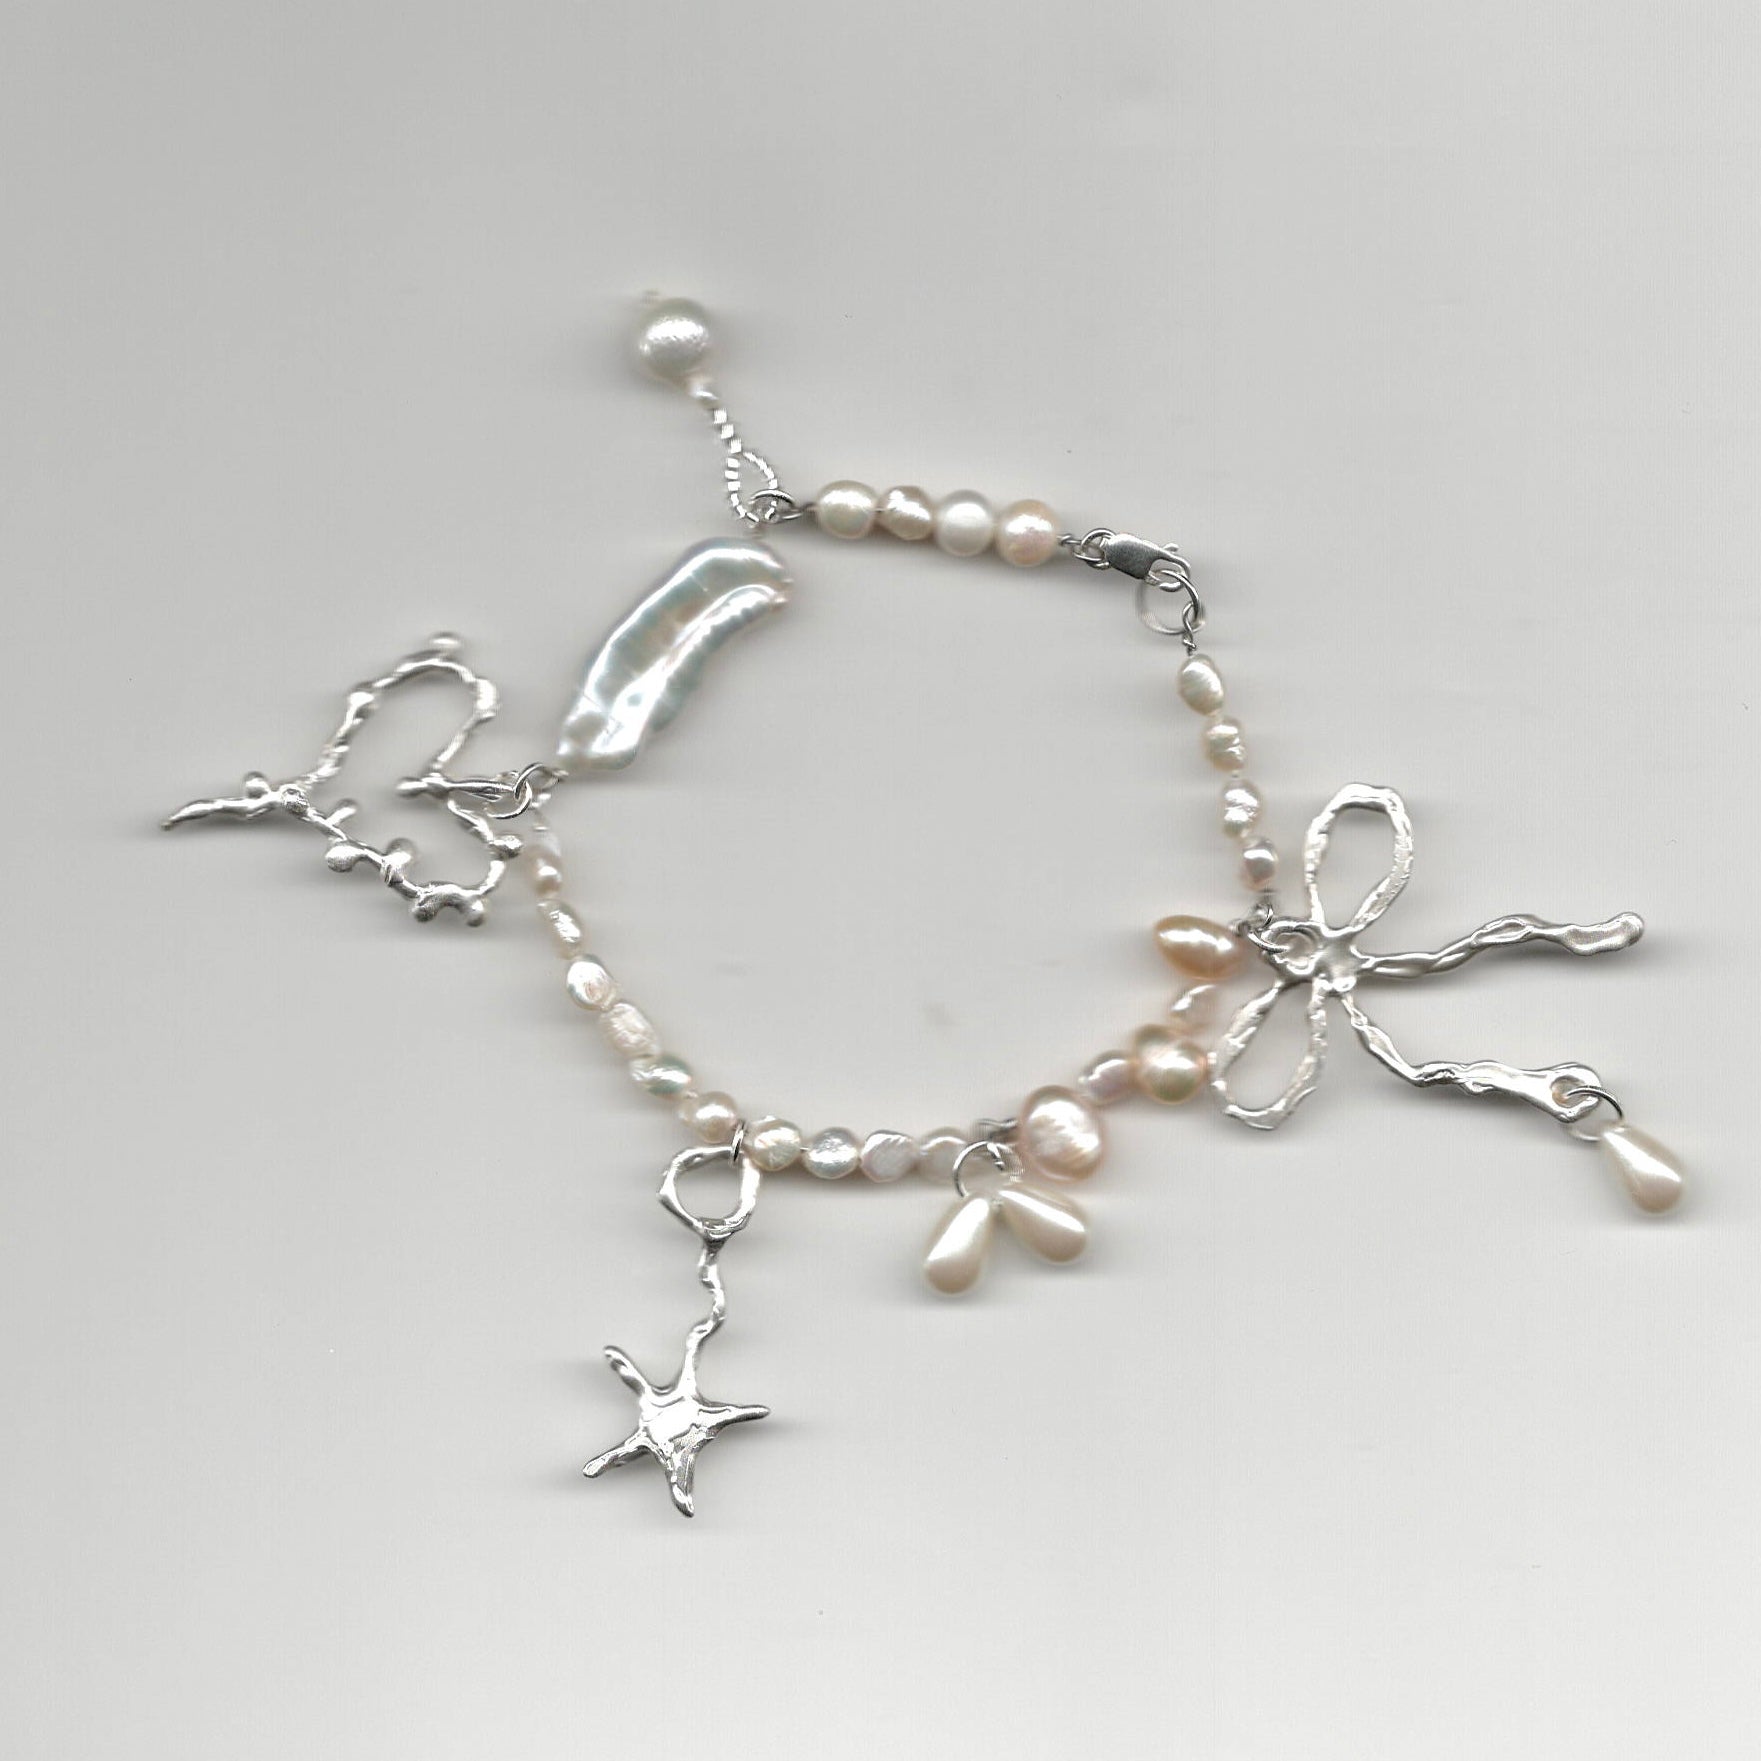 AVBeads Handmade Celtic Fairy Fantasy Pagan Glass Beaded Metal Charms  Jewelry Memory Wire Bracelet Wrap 3Layer